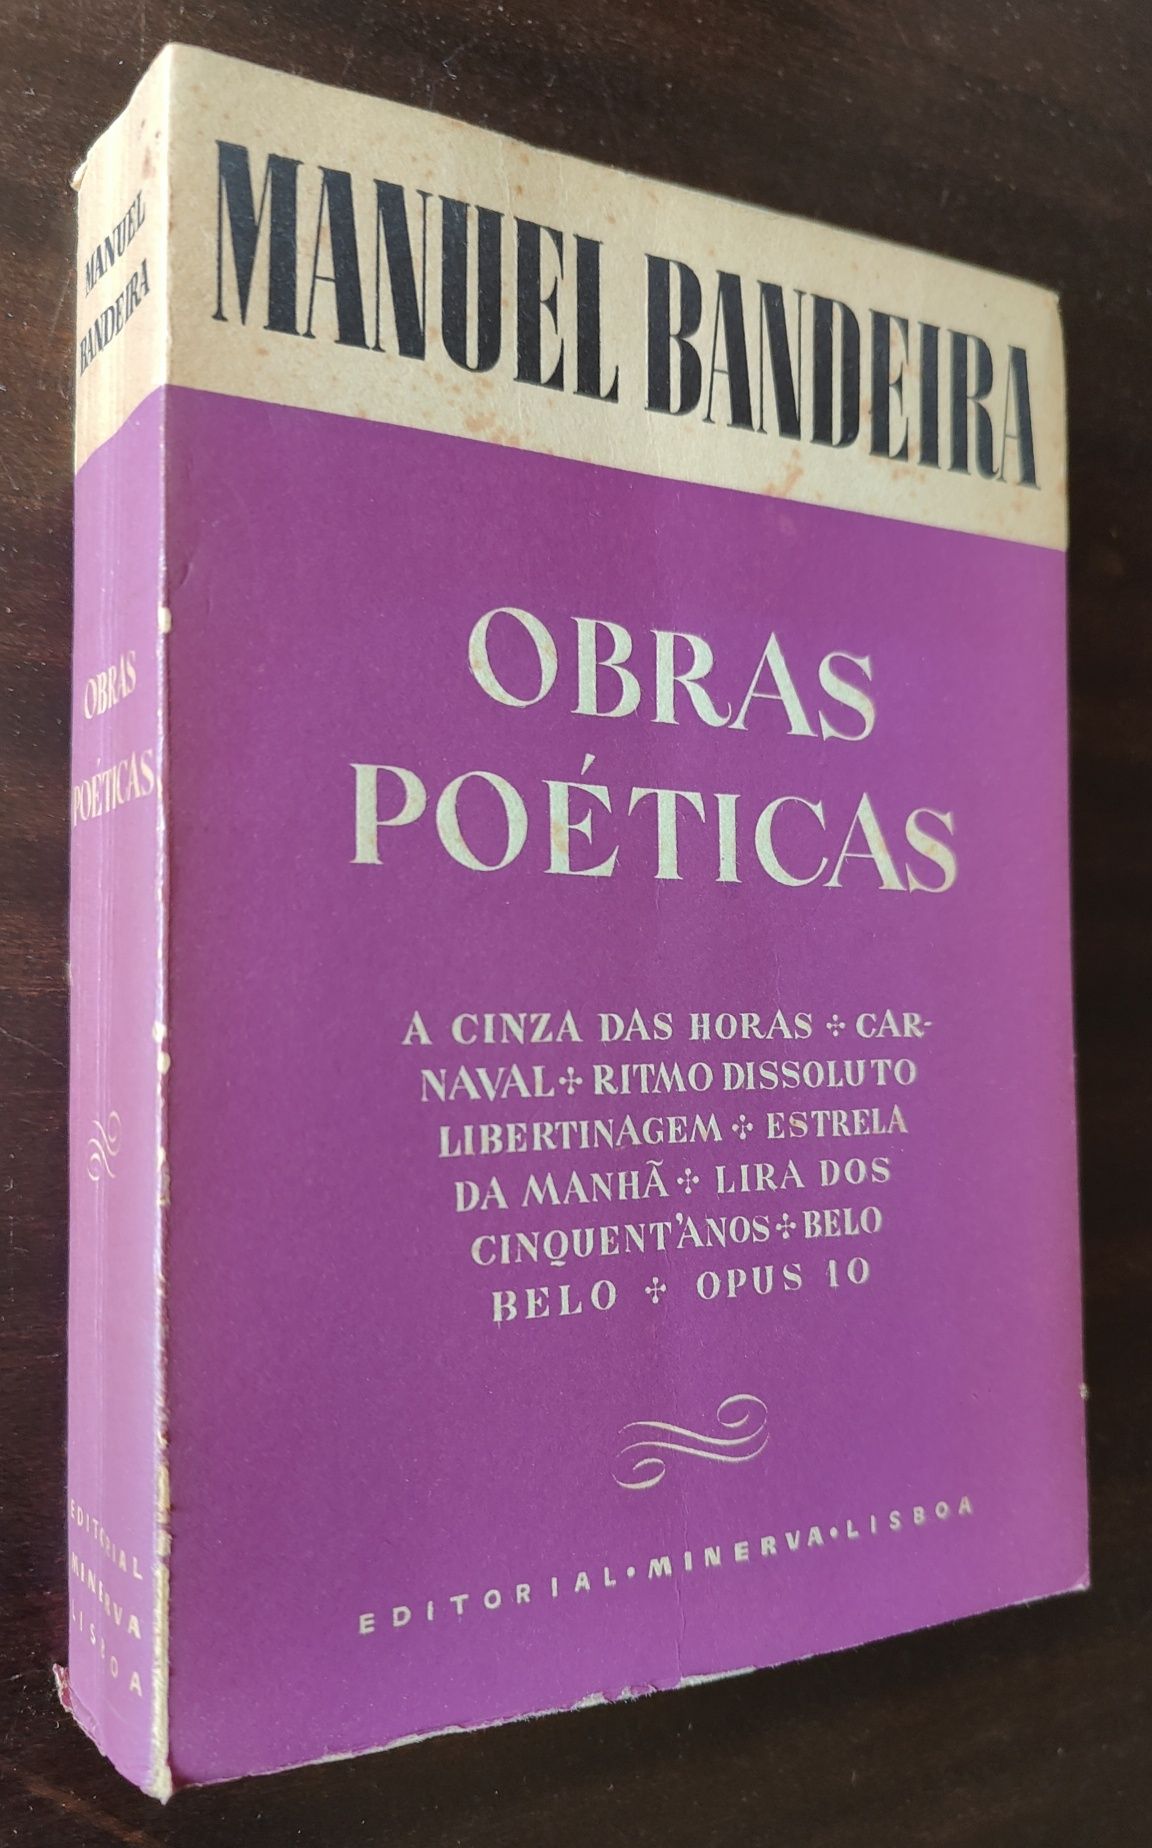 Manuel Bandeira obras poéticas